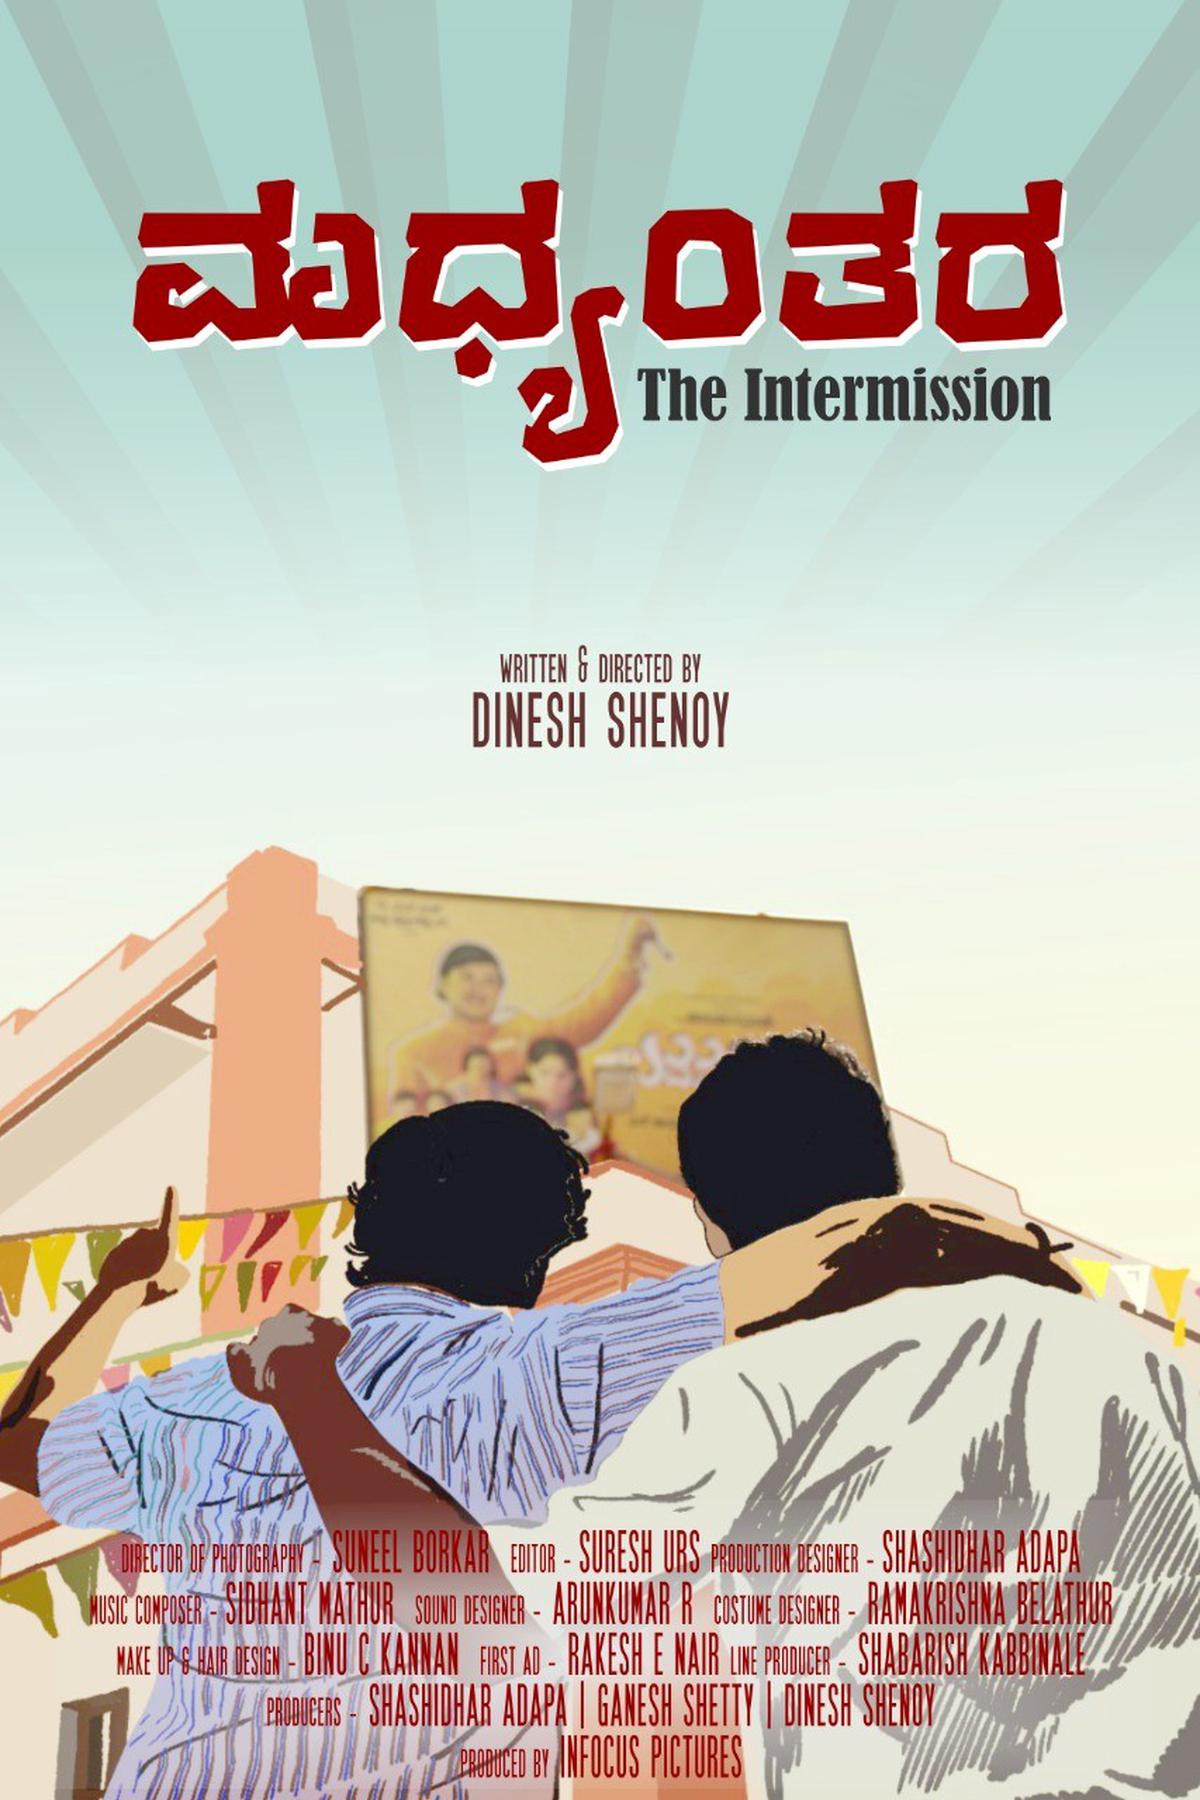 Kannada short film 'Madhyantara' chosen for International Film Festival of India